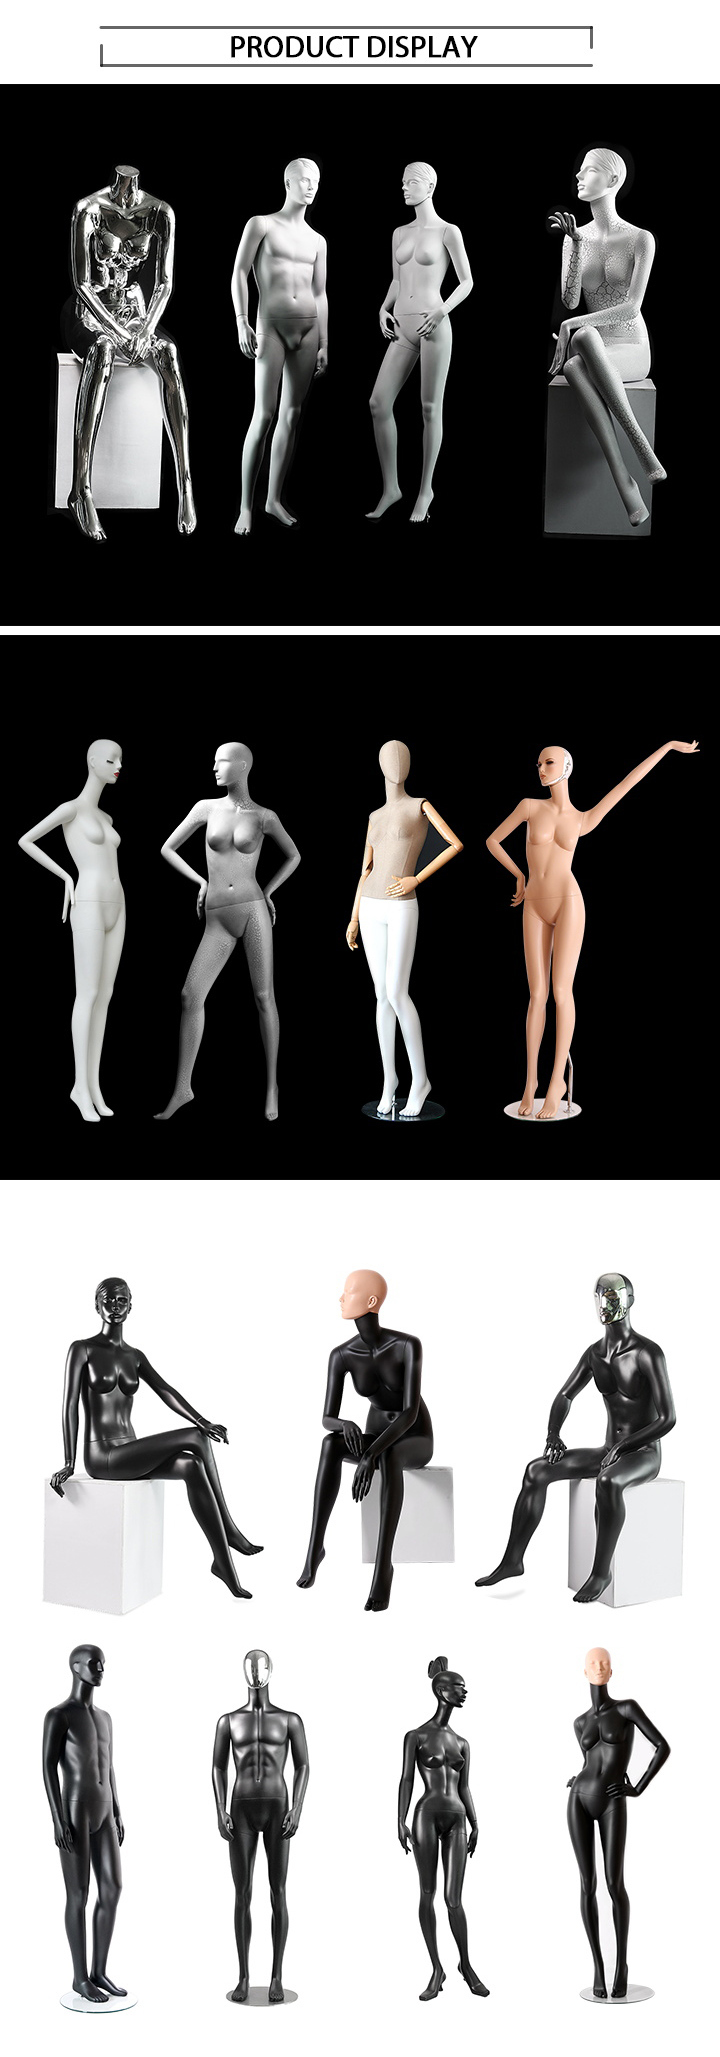 Matt Black Head Plating Full Body Male Mannequin Display Models